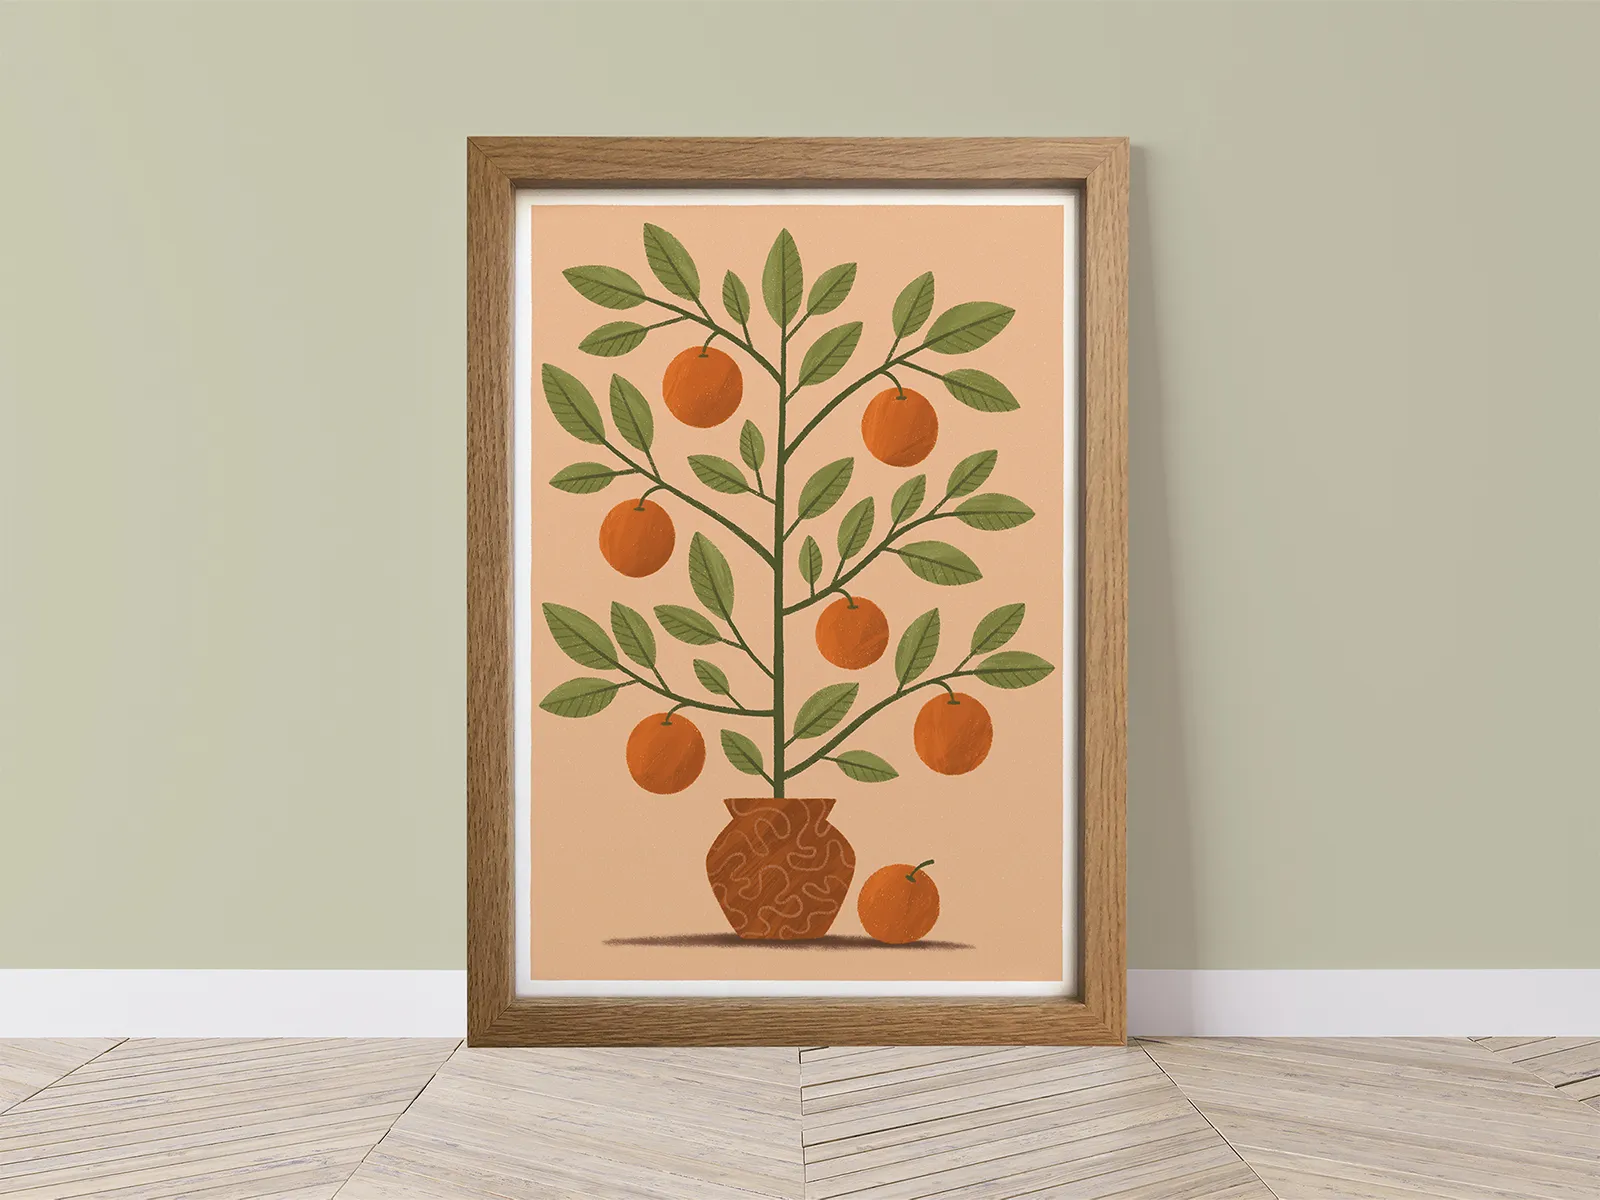 Fruit Trees: Orange tree